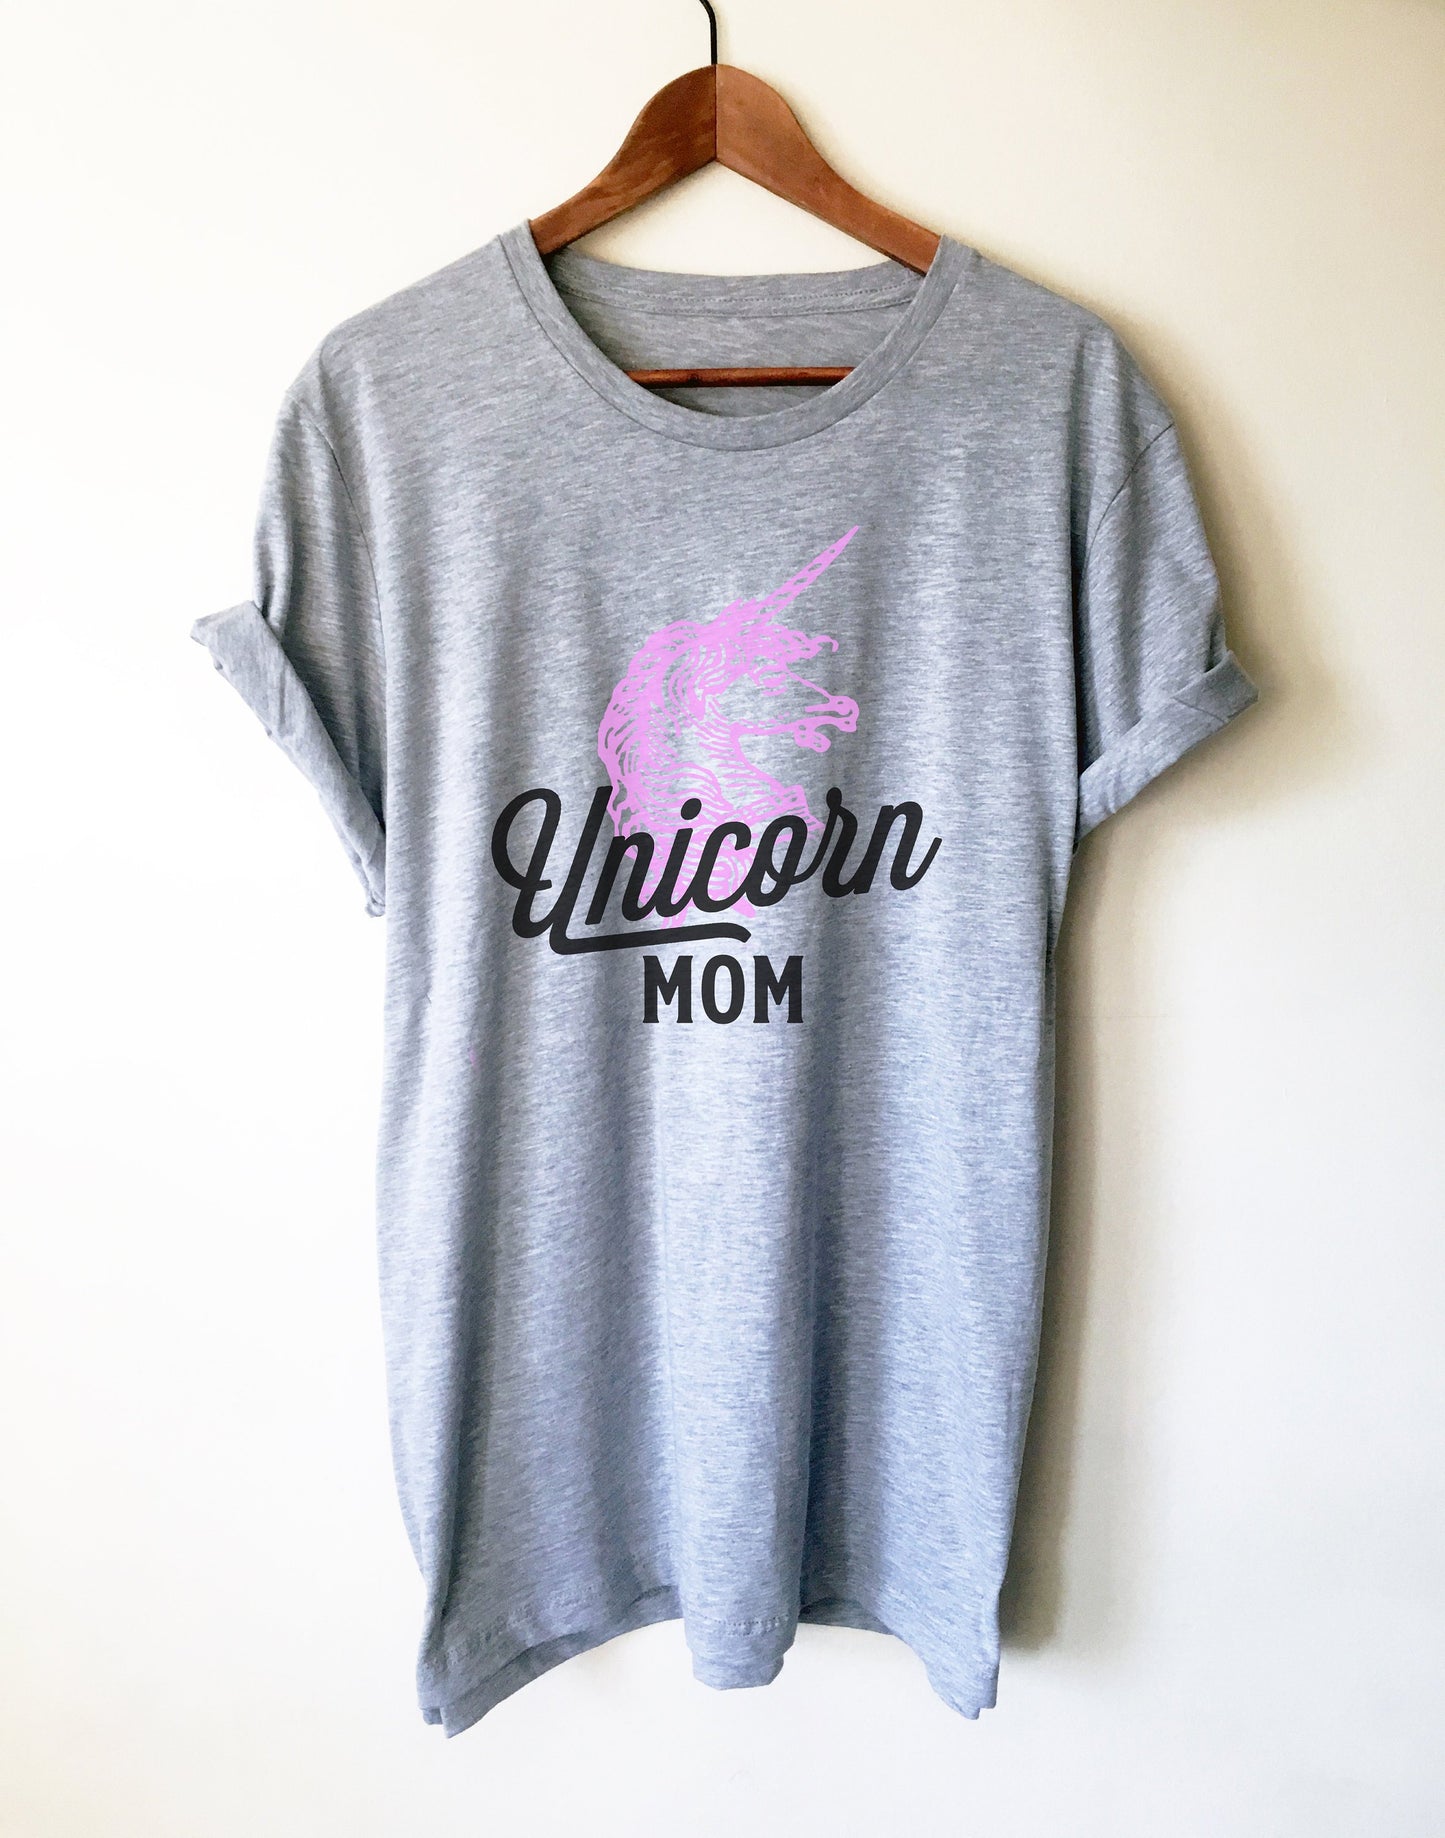 Unicorn Mom Unisex Shirt - Unicorn T Shirt, Unicorn Gift, Unicorn Birthday, Unicorn Party, Mom Shirt, Mom Gift, Gift For Mom, Mothers Day